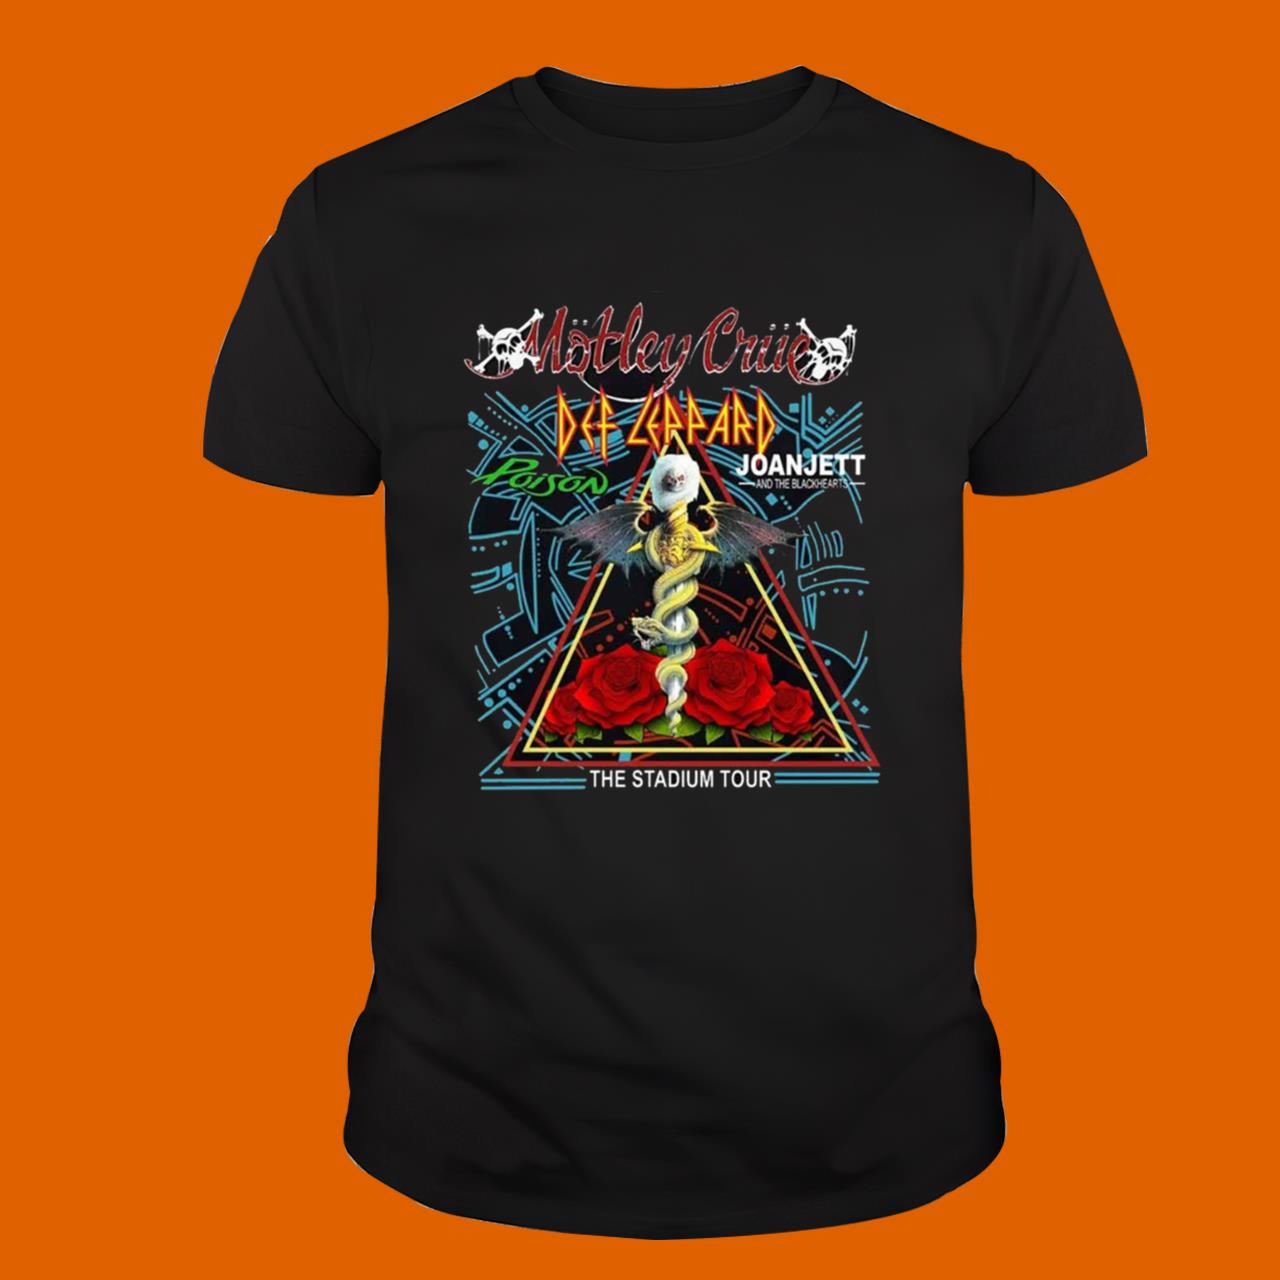 The Stadium Tour 2022 Shirt Def Leppard Motley Crue Poison Joan Jett